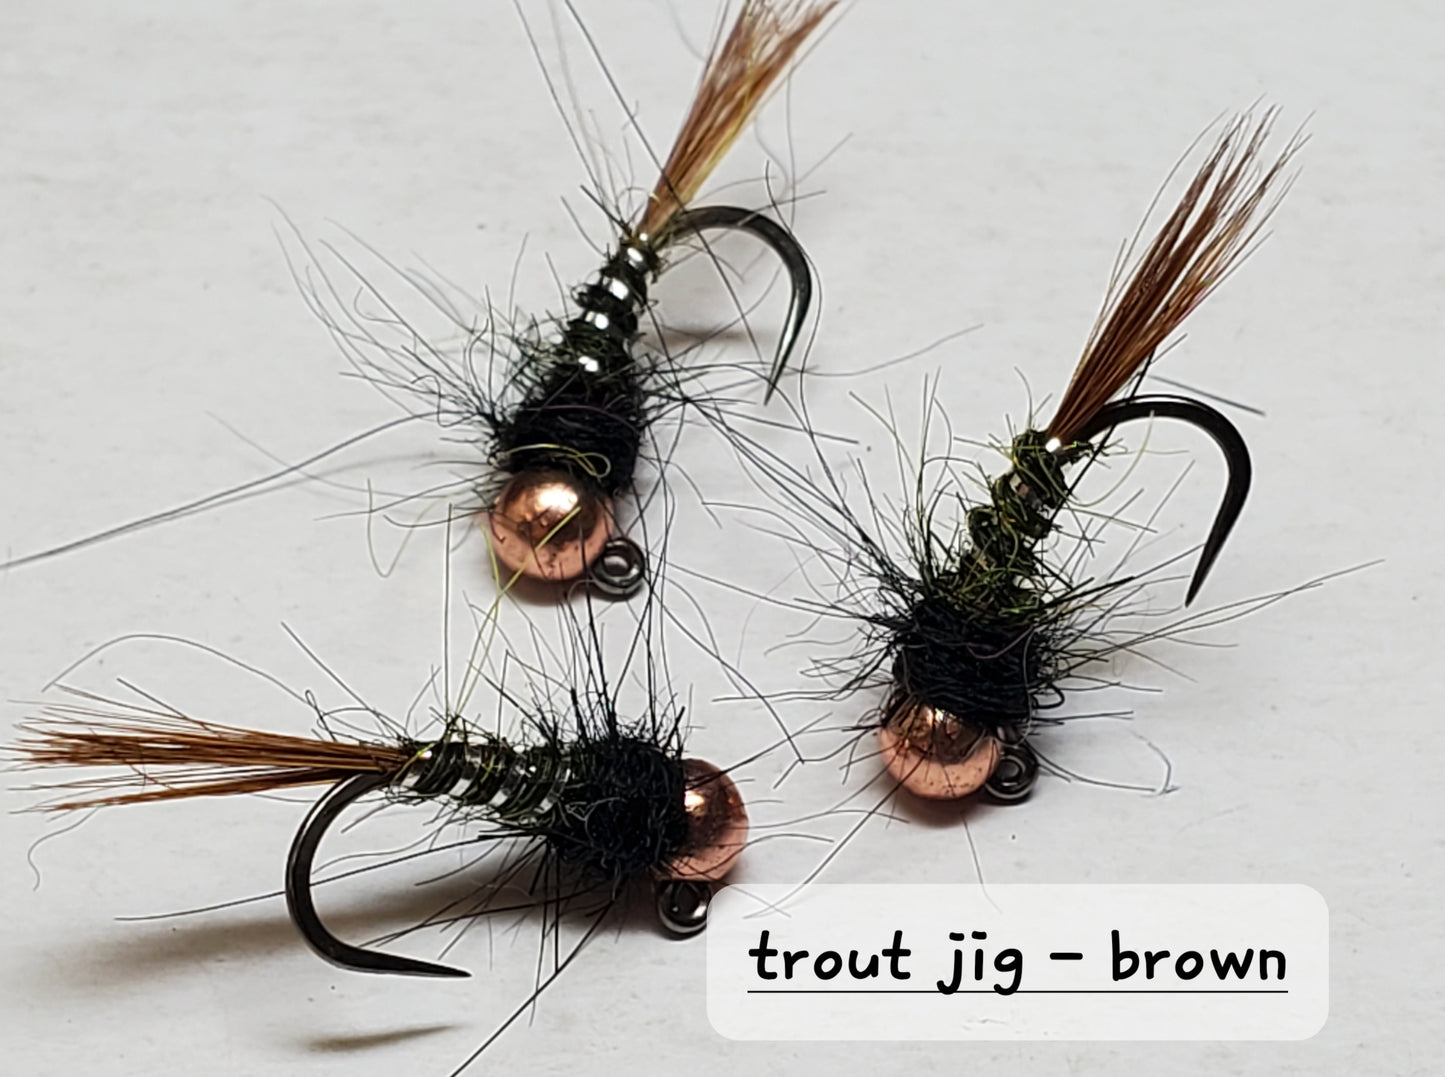 Trout Jig, Tungsten Bead Head Trout Jig, Trout Jig Nymph, Bead Head Nymph, Trout Jig Brown